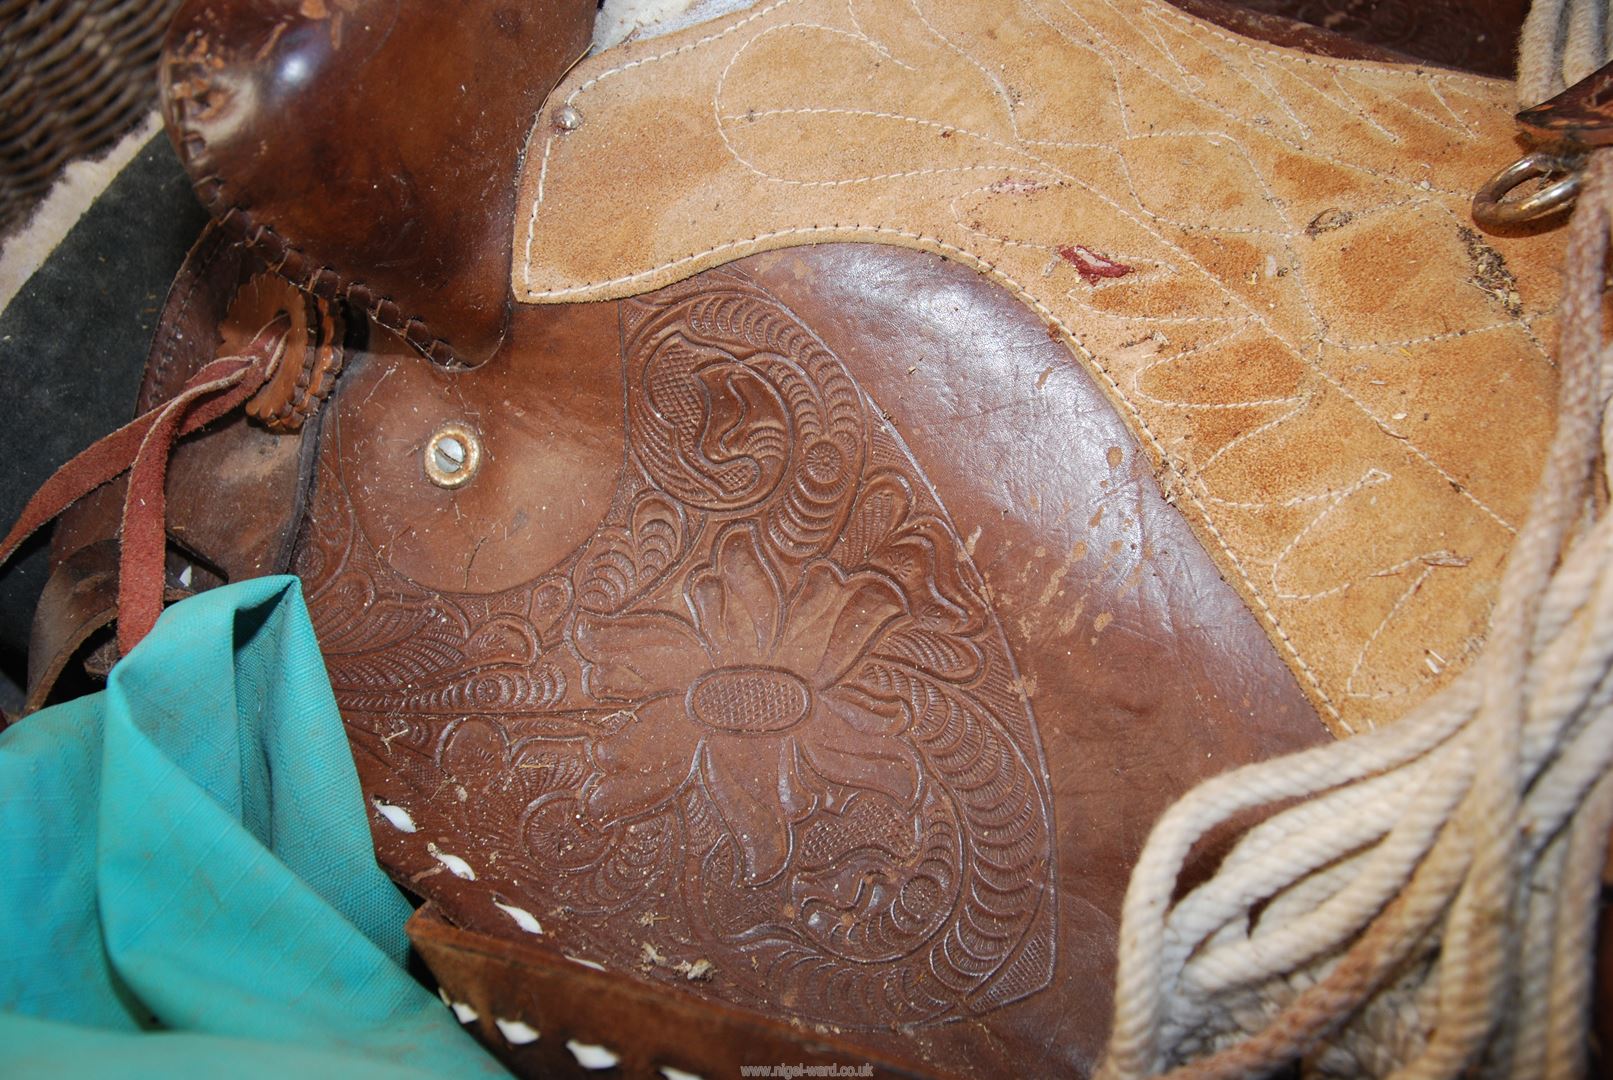 Western Saddle and Horse rugs. - Image 2 of 2